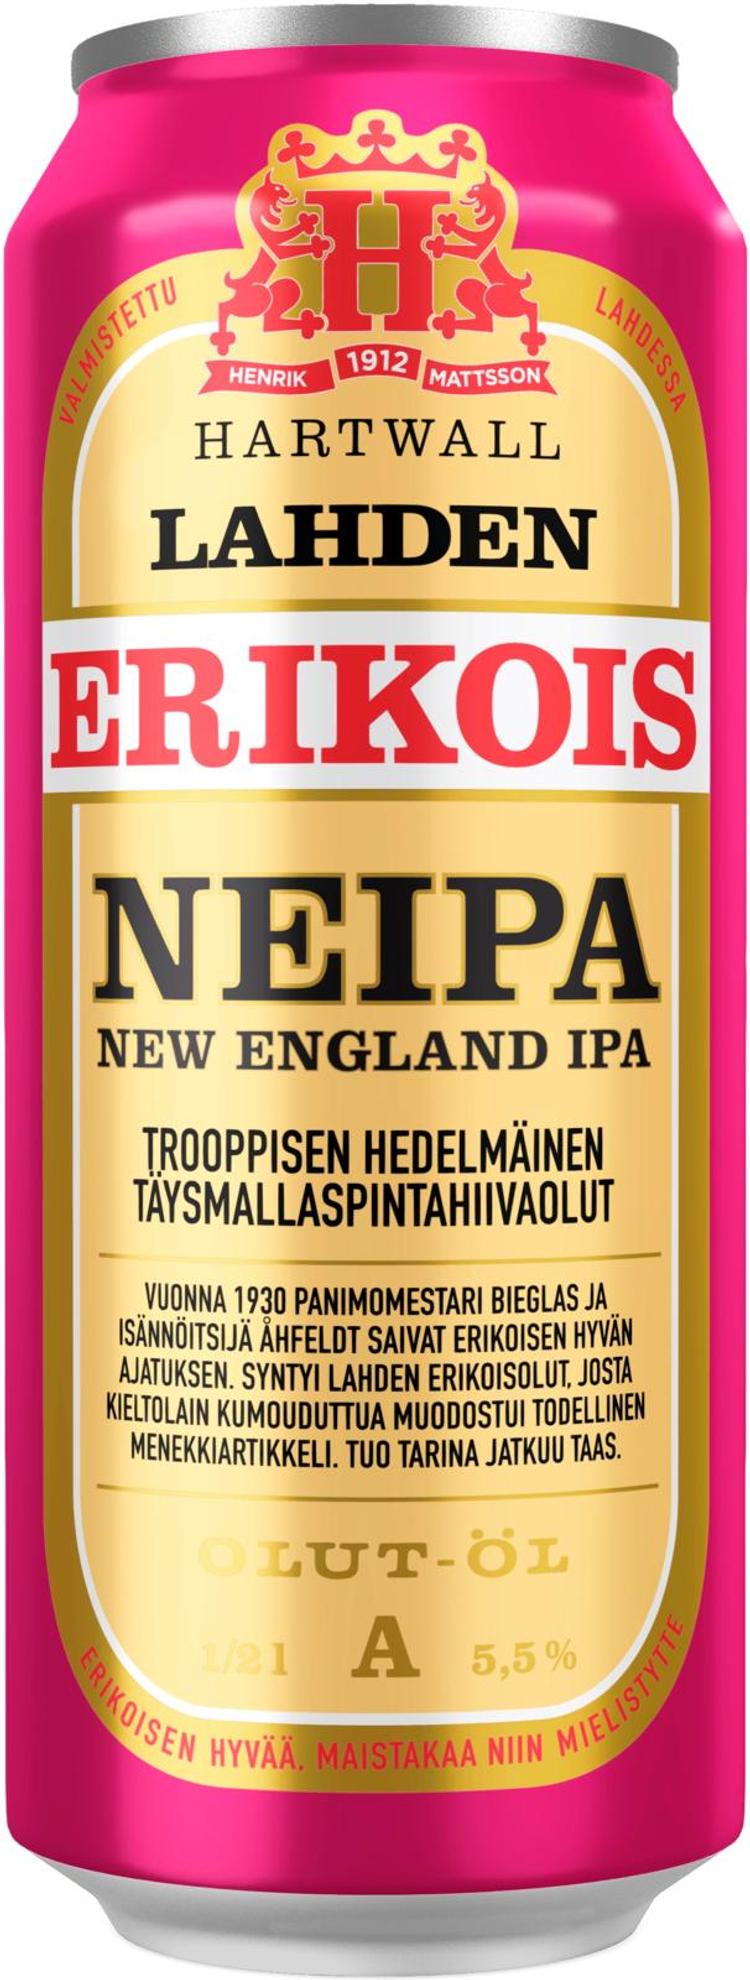 Lahden Erikois NEIPA olut 5,5% 0,5 l